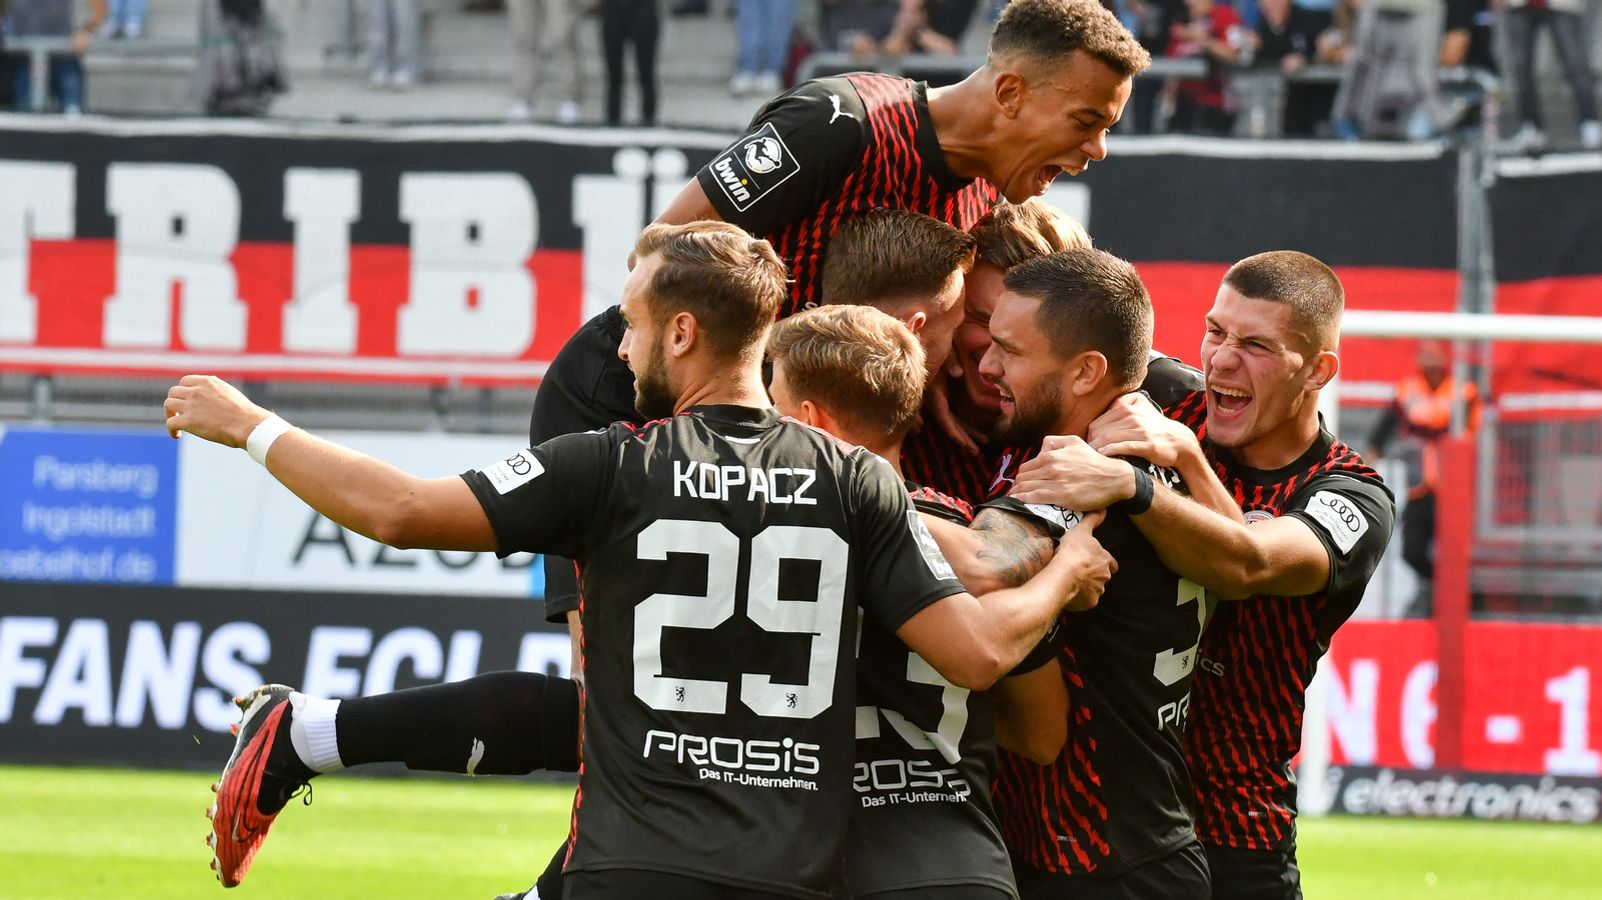 FC Ingolstadt dominates against Ulm: Four goals secure a convincing win